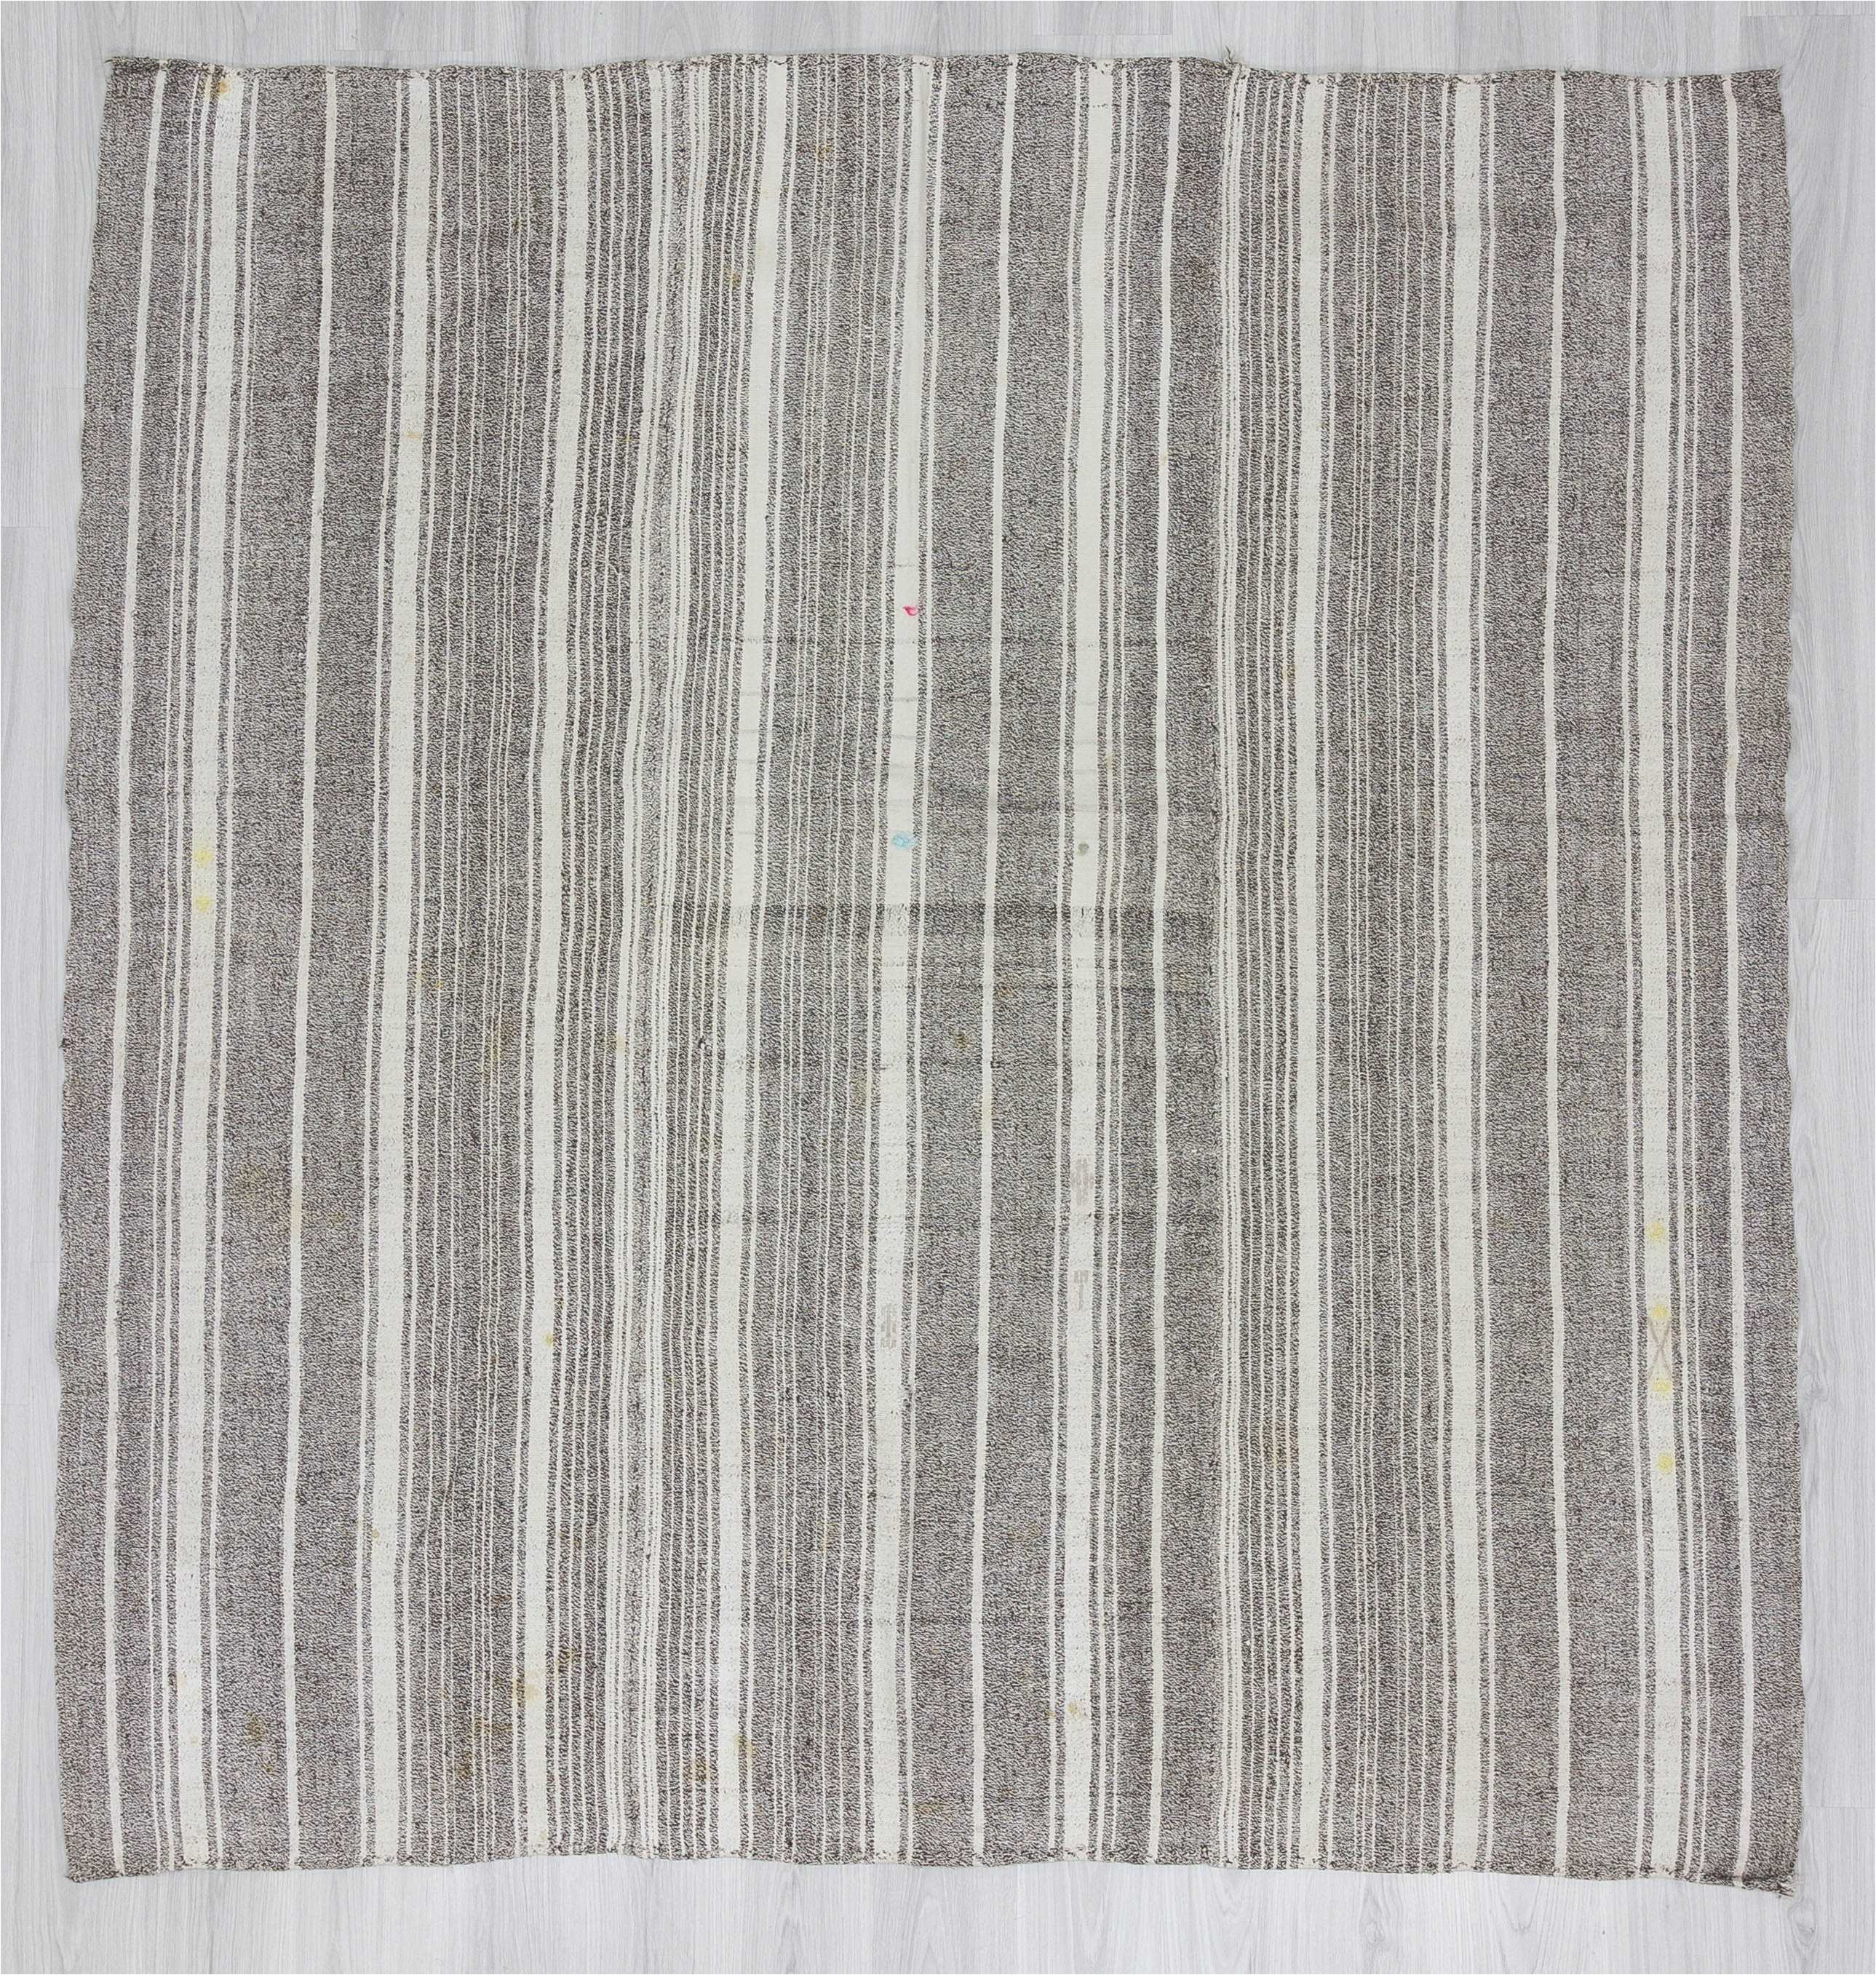 1216 white gray striped vintage modern turkish kilim